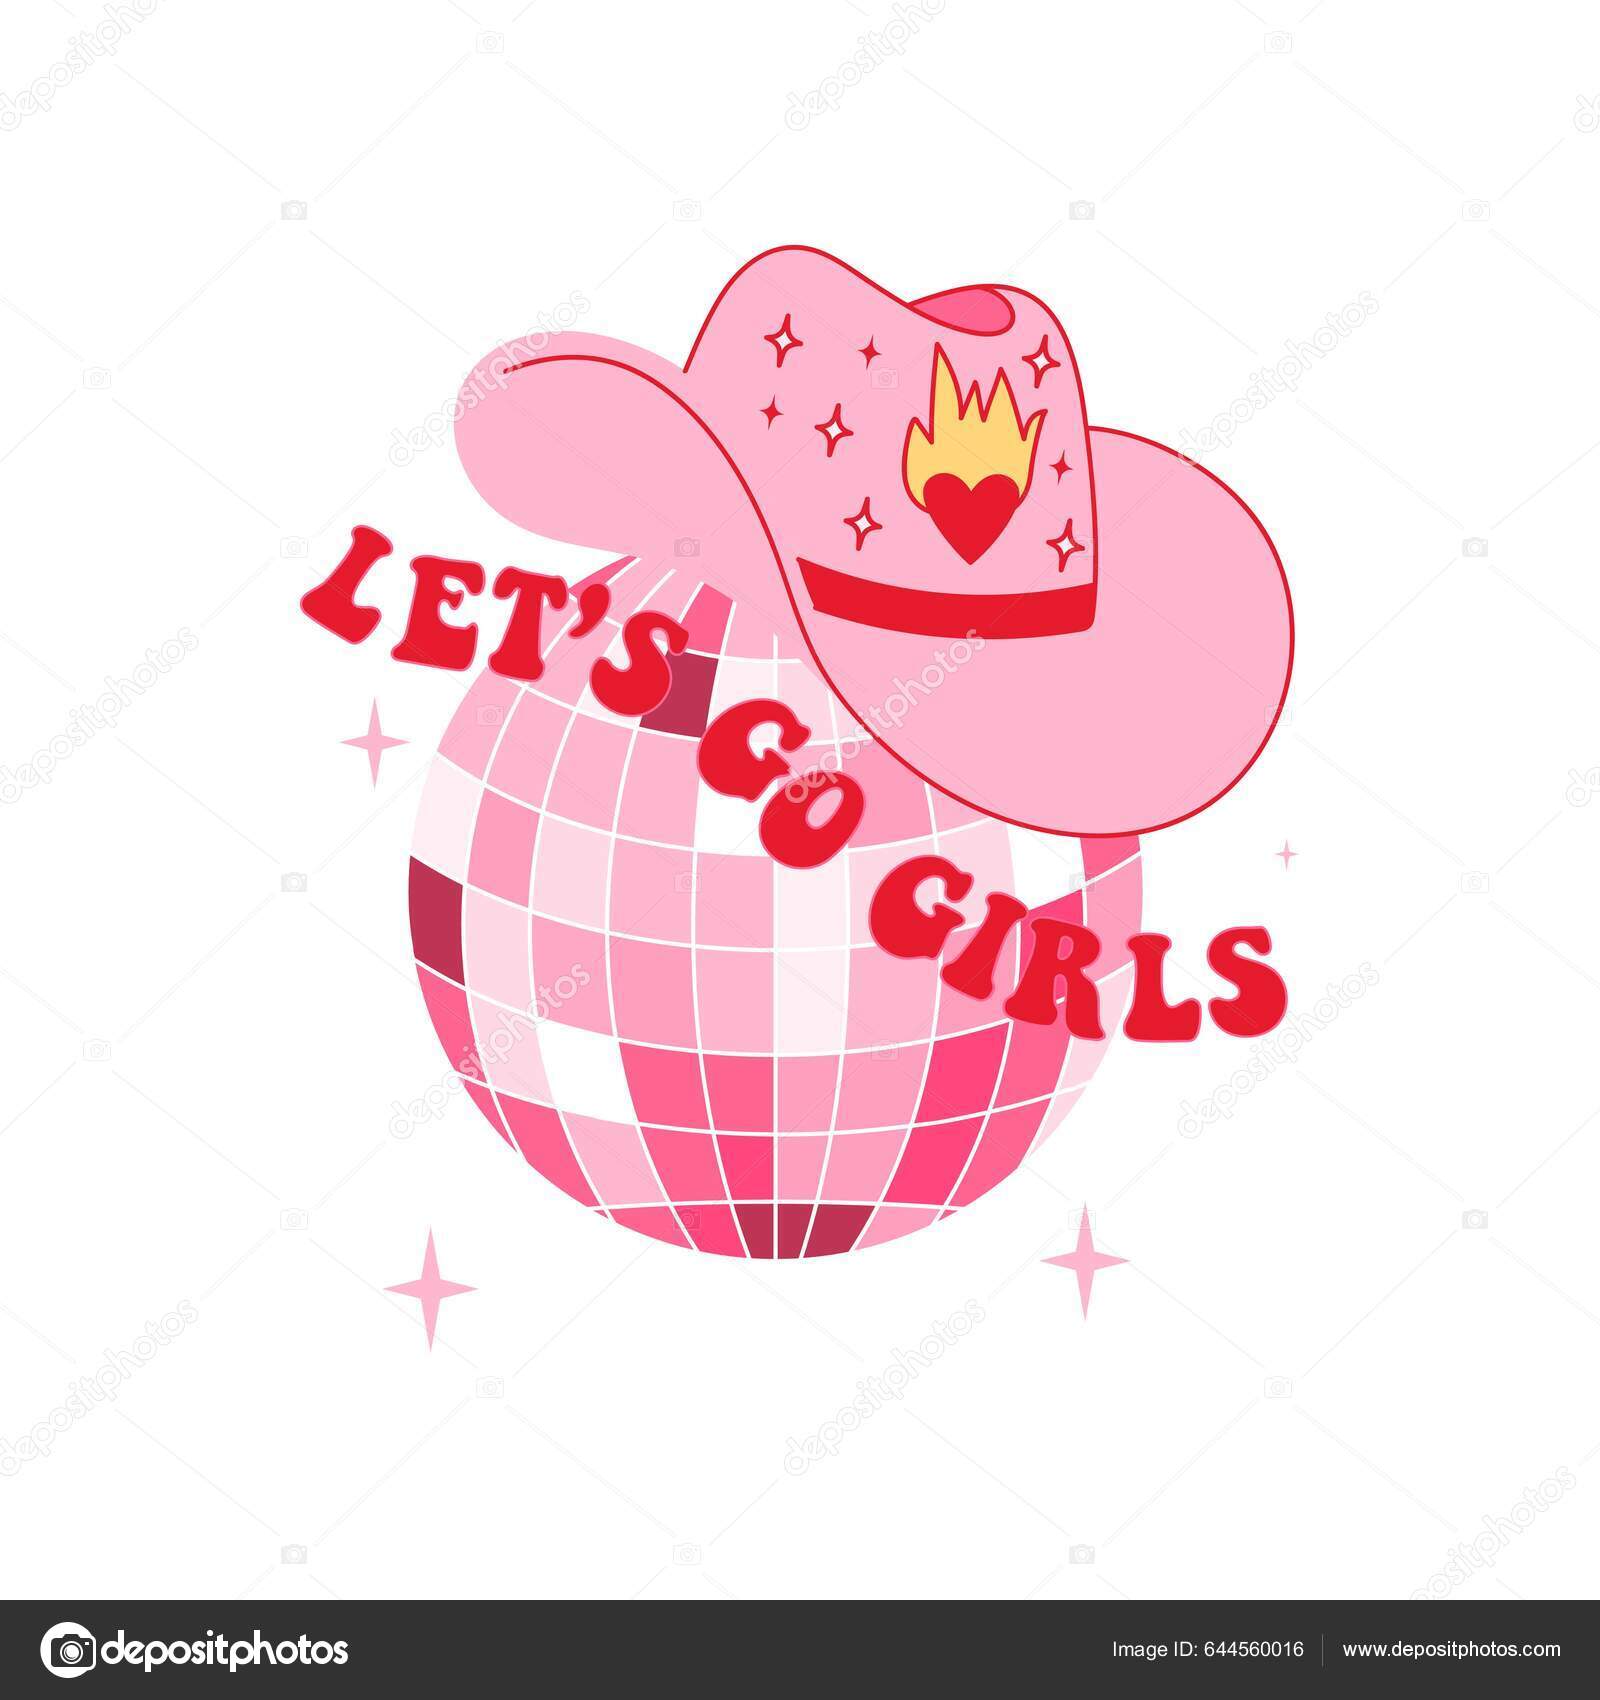 https://st5.depositphotos.com/24720836/64456/v/1600/depositphotos_644560016-stock-illustration-retro-pink-cowgirl-hat-disco.jpg